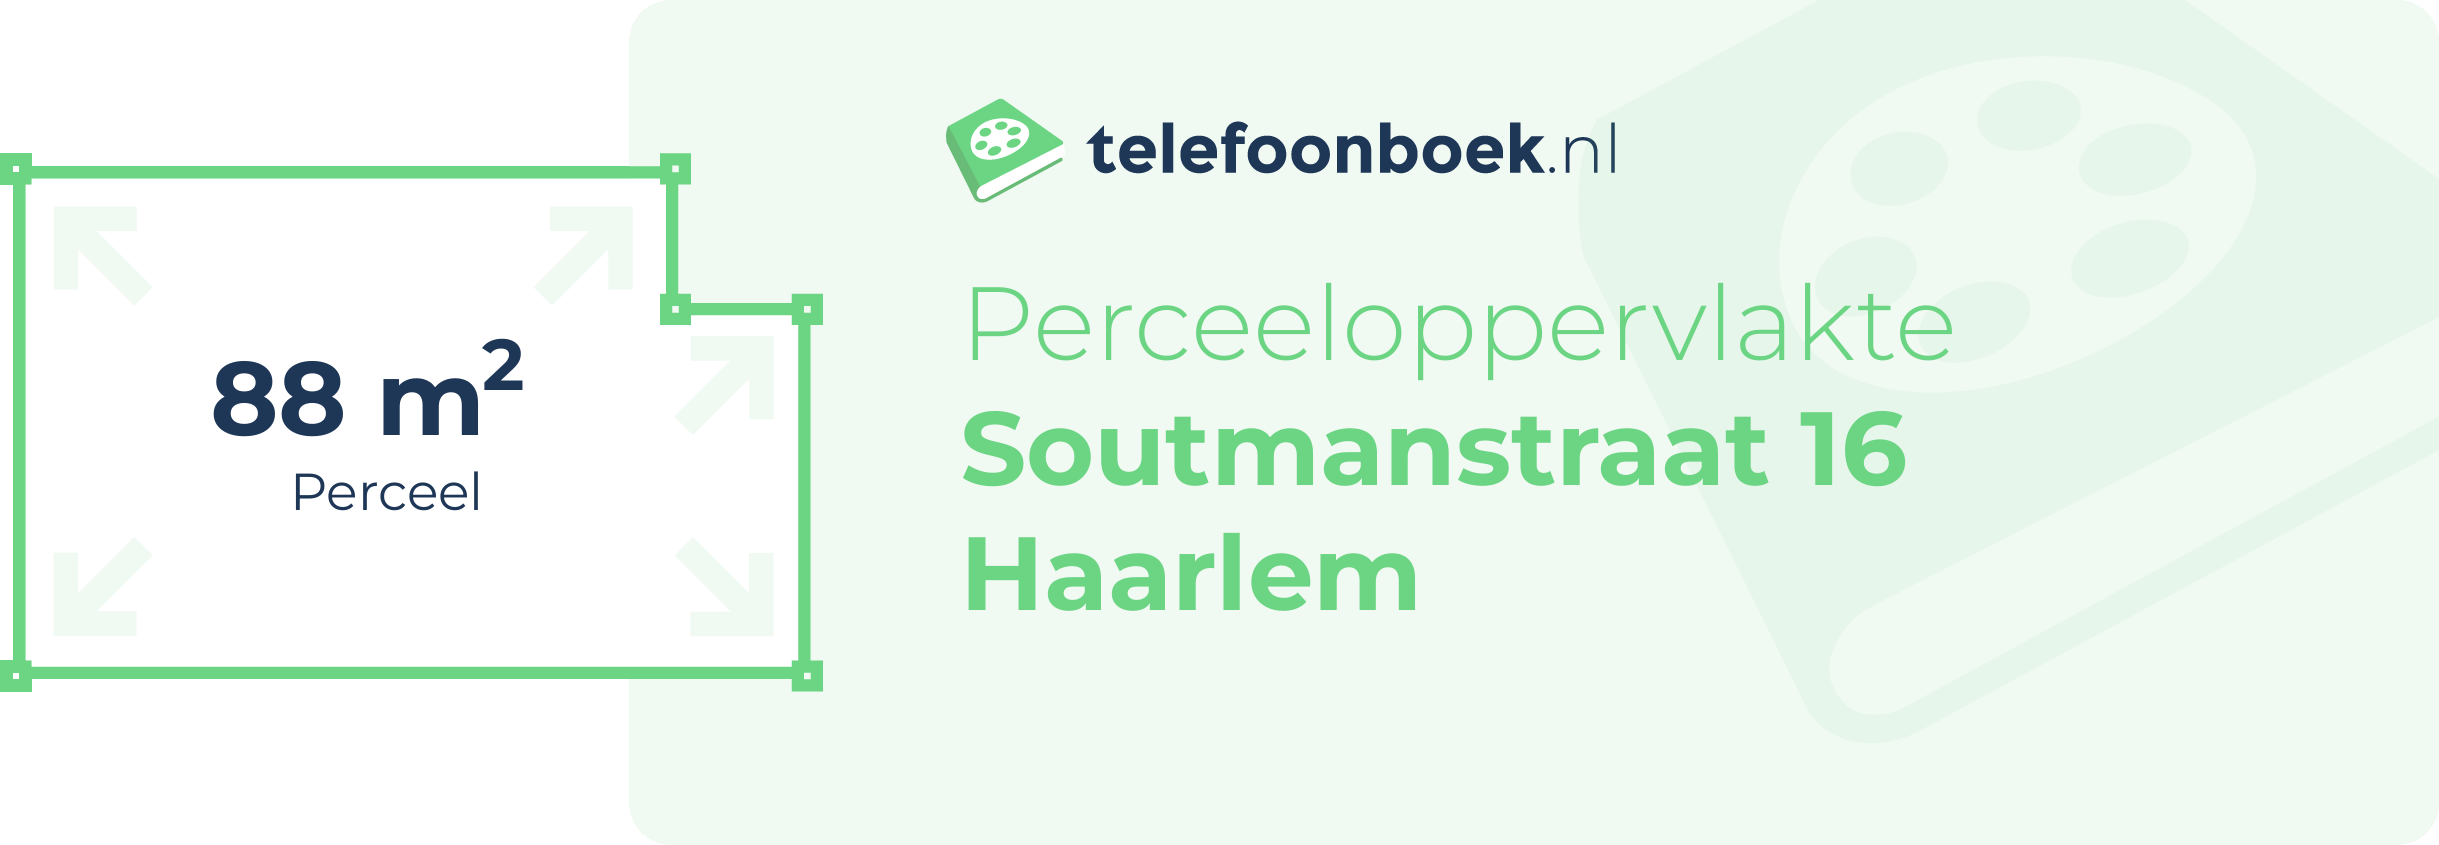 Perceeloppervlakte Soutmanstraat 16 Haarlem